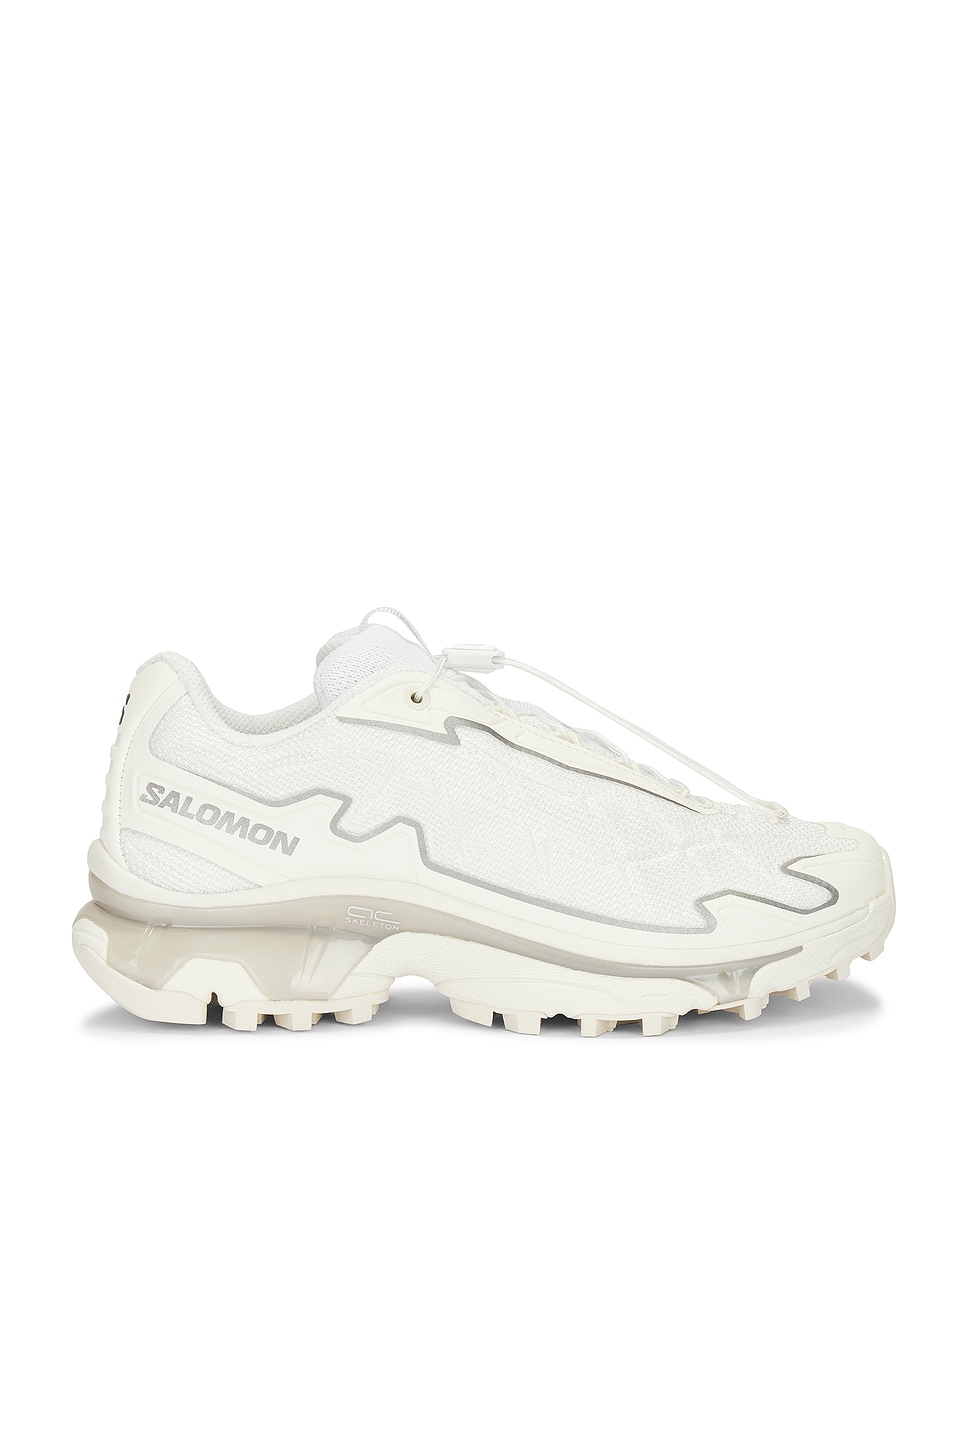 Image 1 of Salomon XT-SLATE Sneaker in Vanilla, White, & Silver